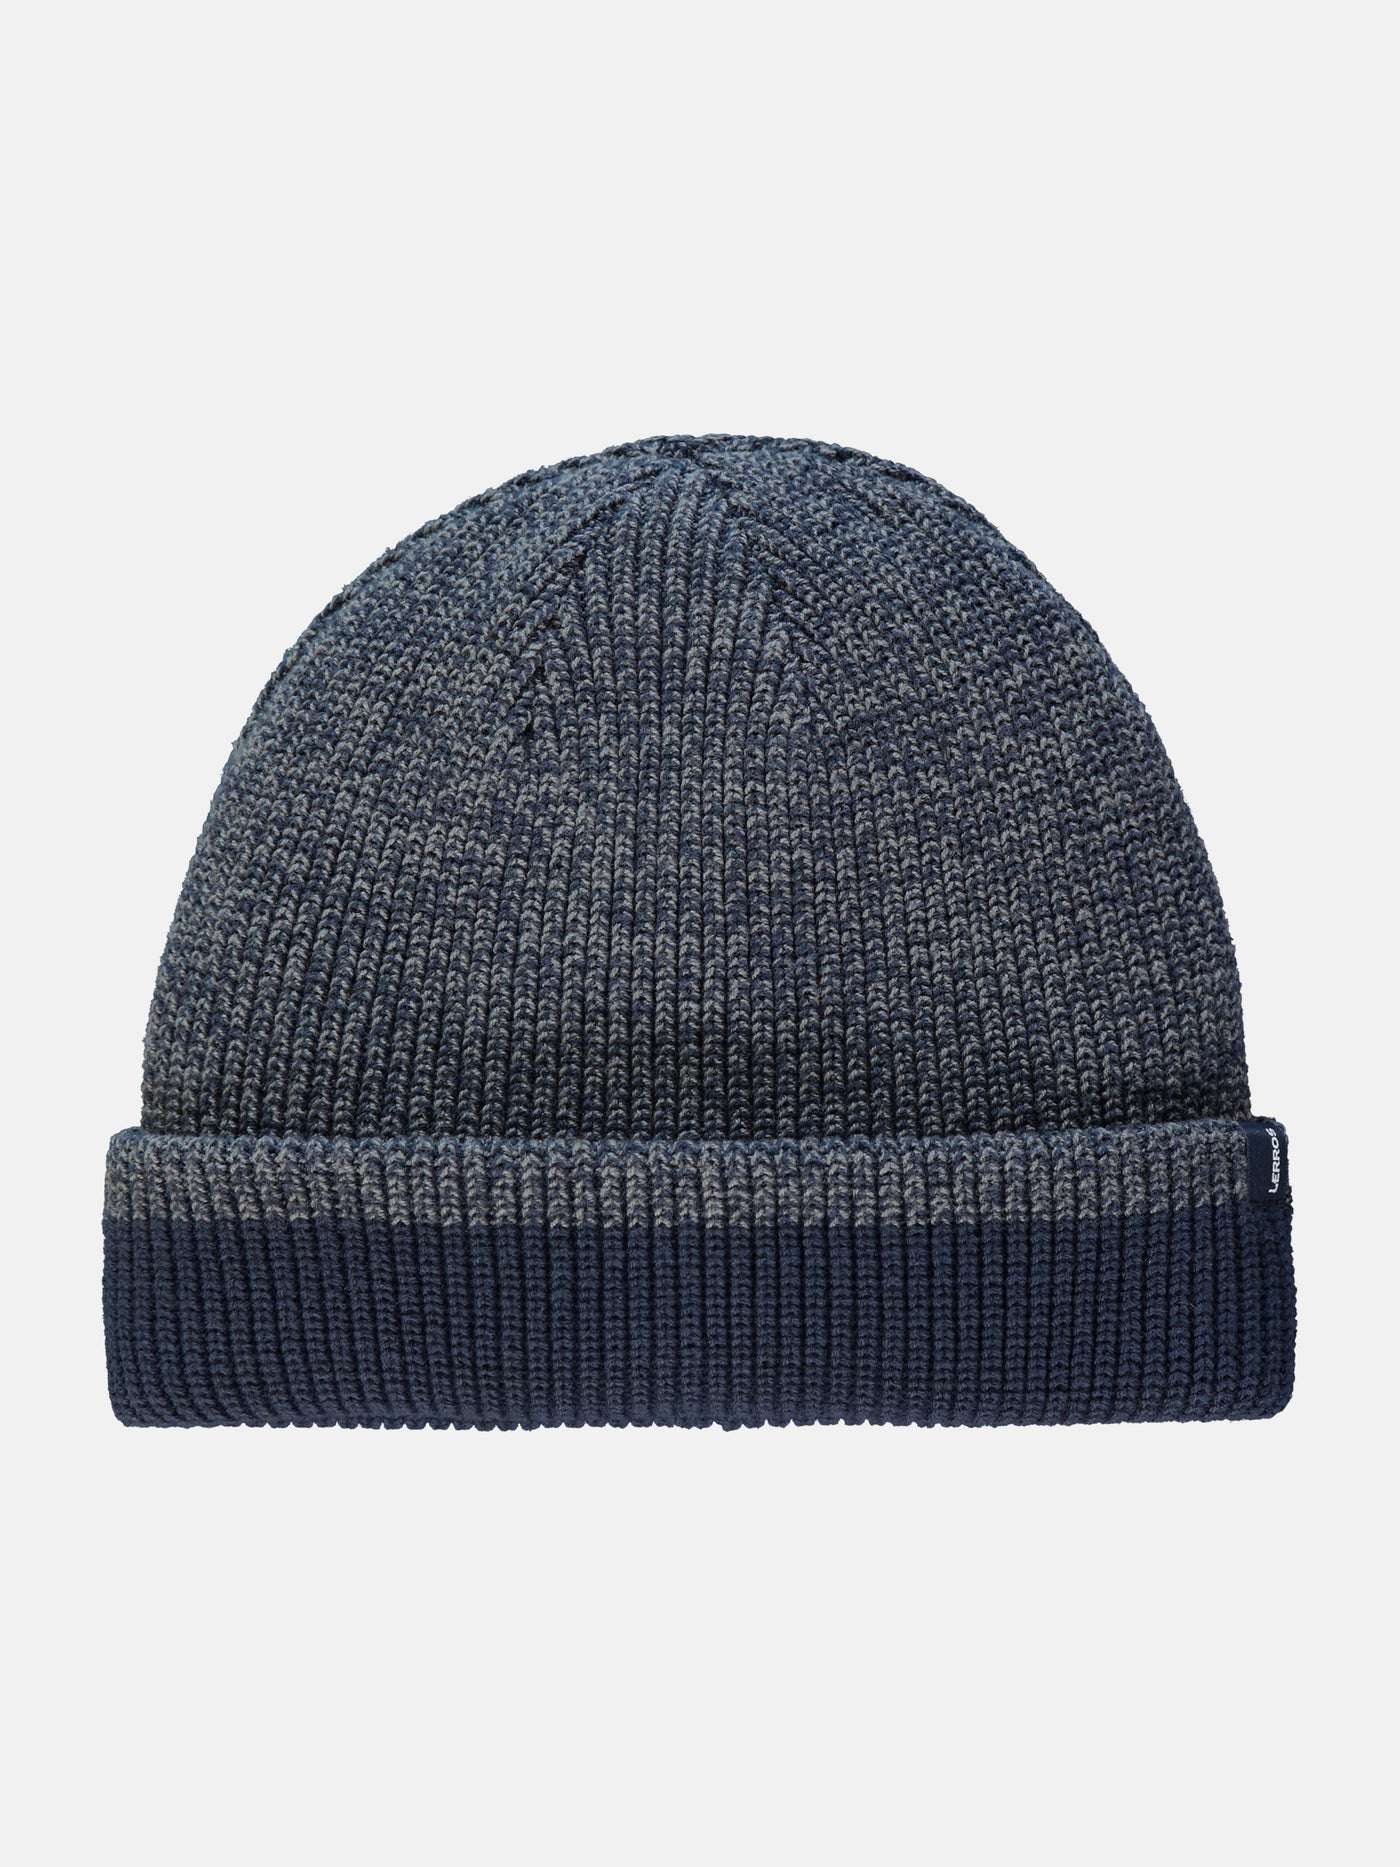 Knit hat, mottled